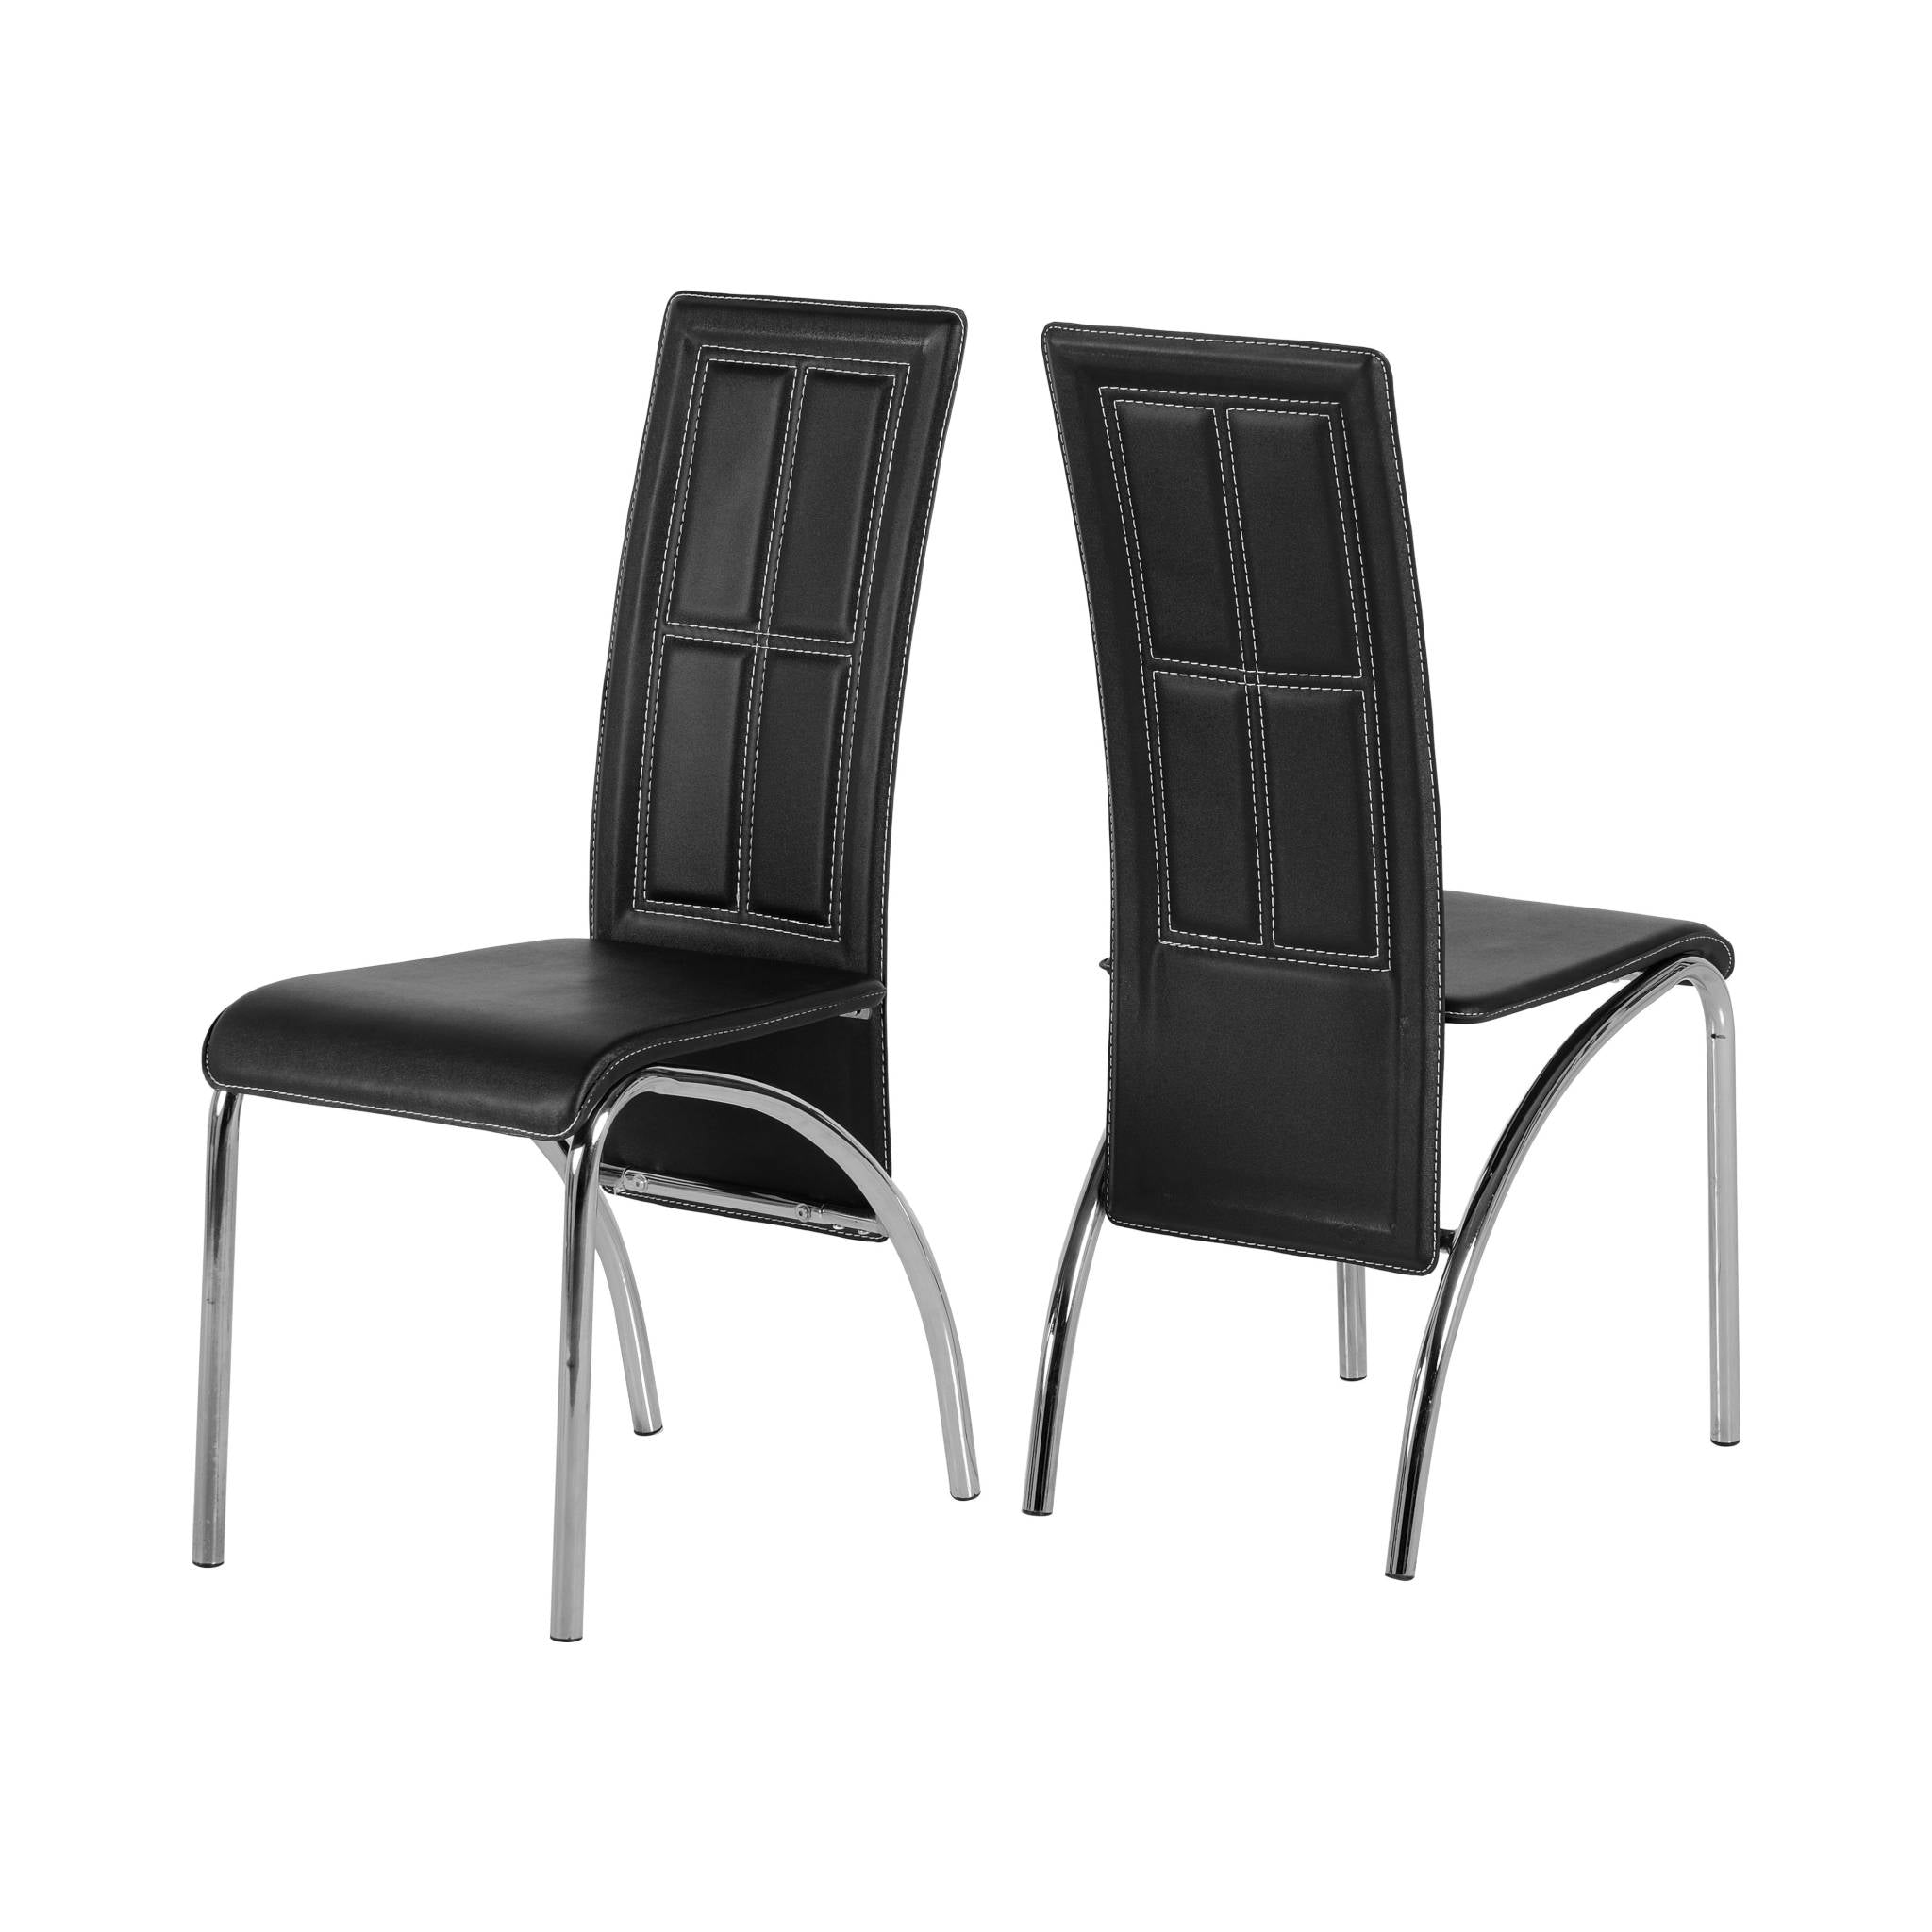 A3 Chair (Black Faux Leather/Chrome)